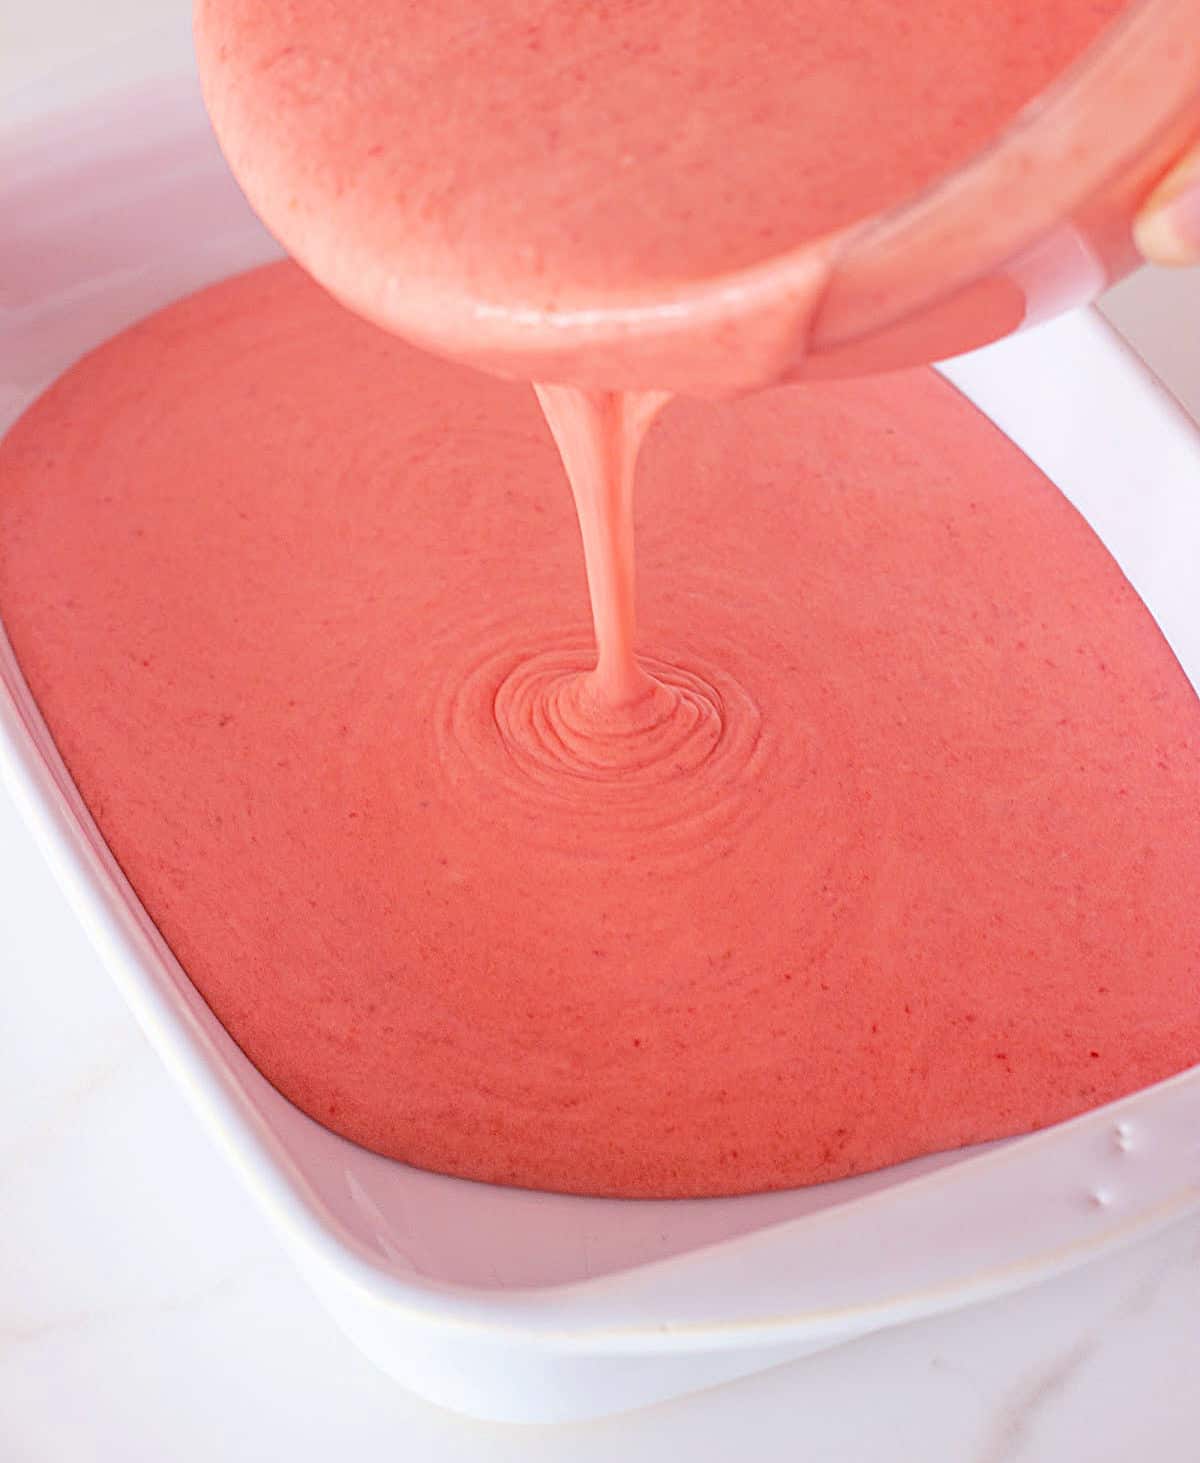 Pouring strawberry ice cream onto white ceramic shallow dish